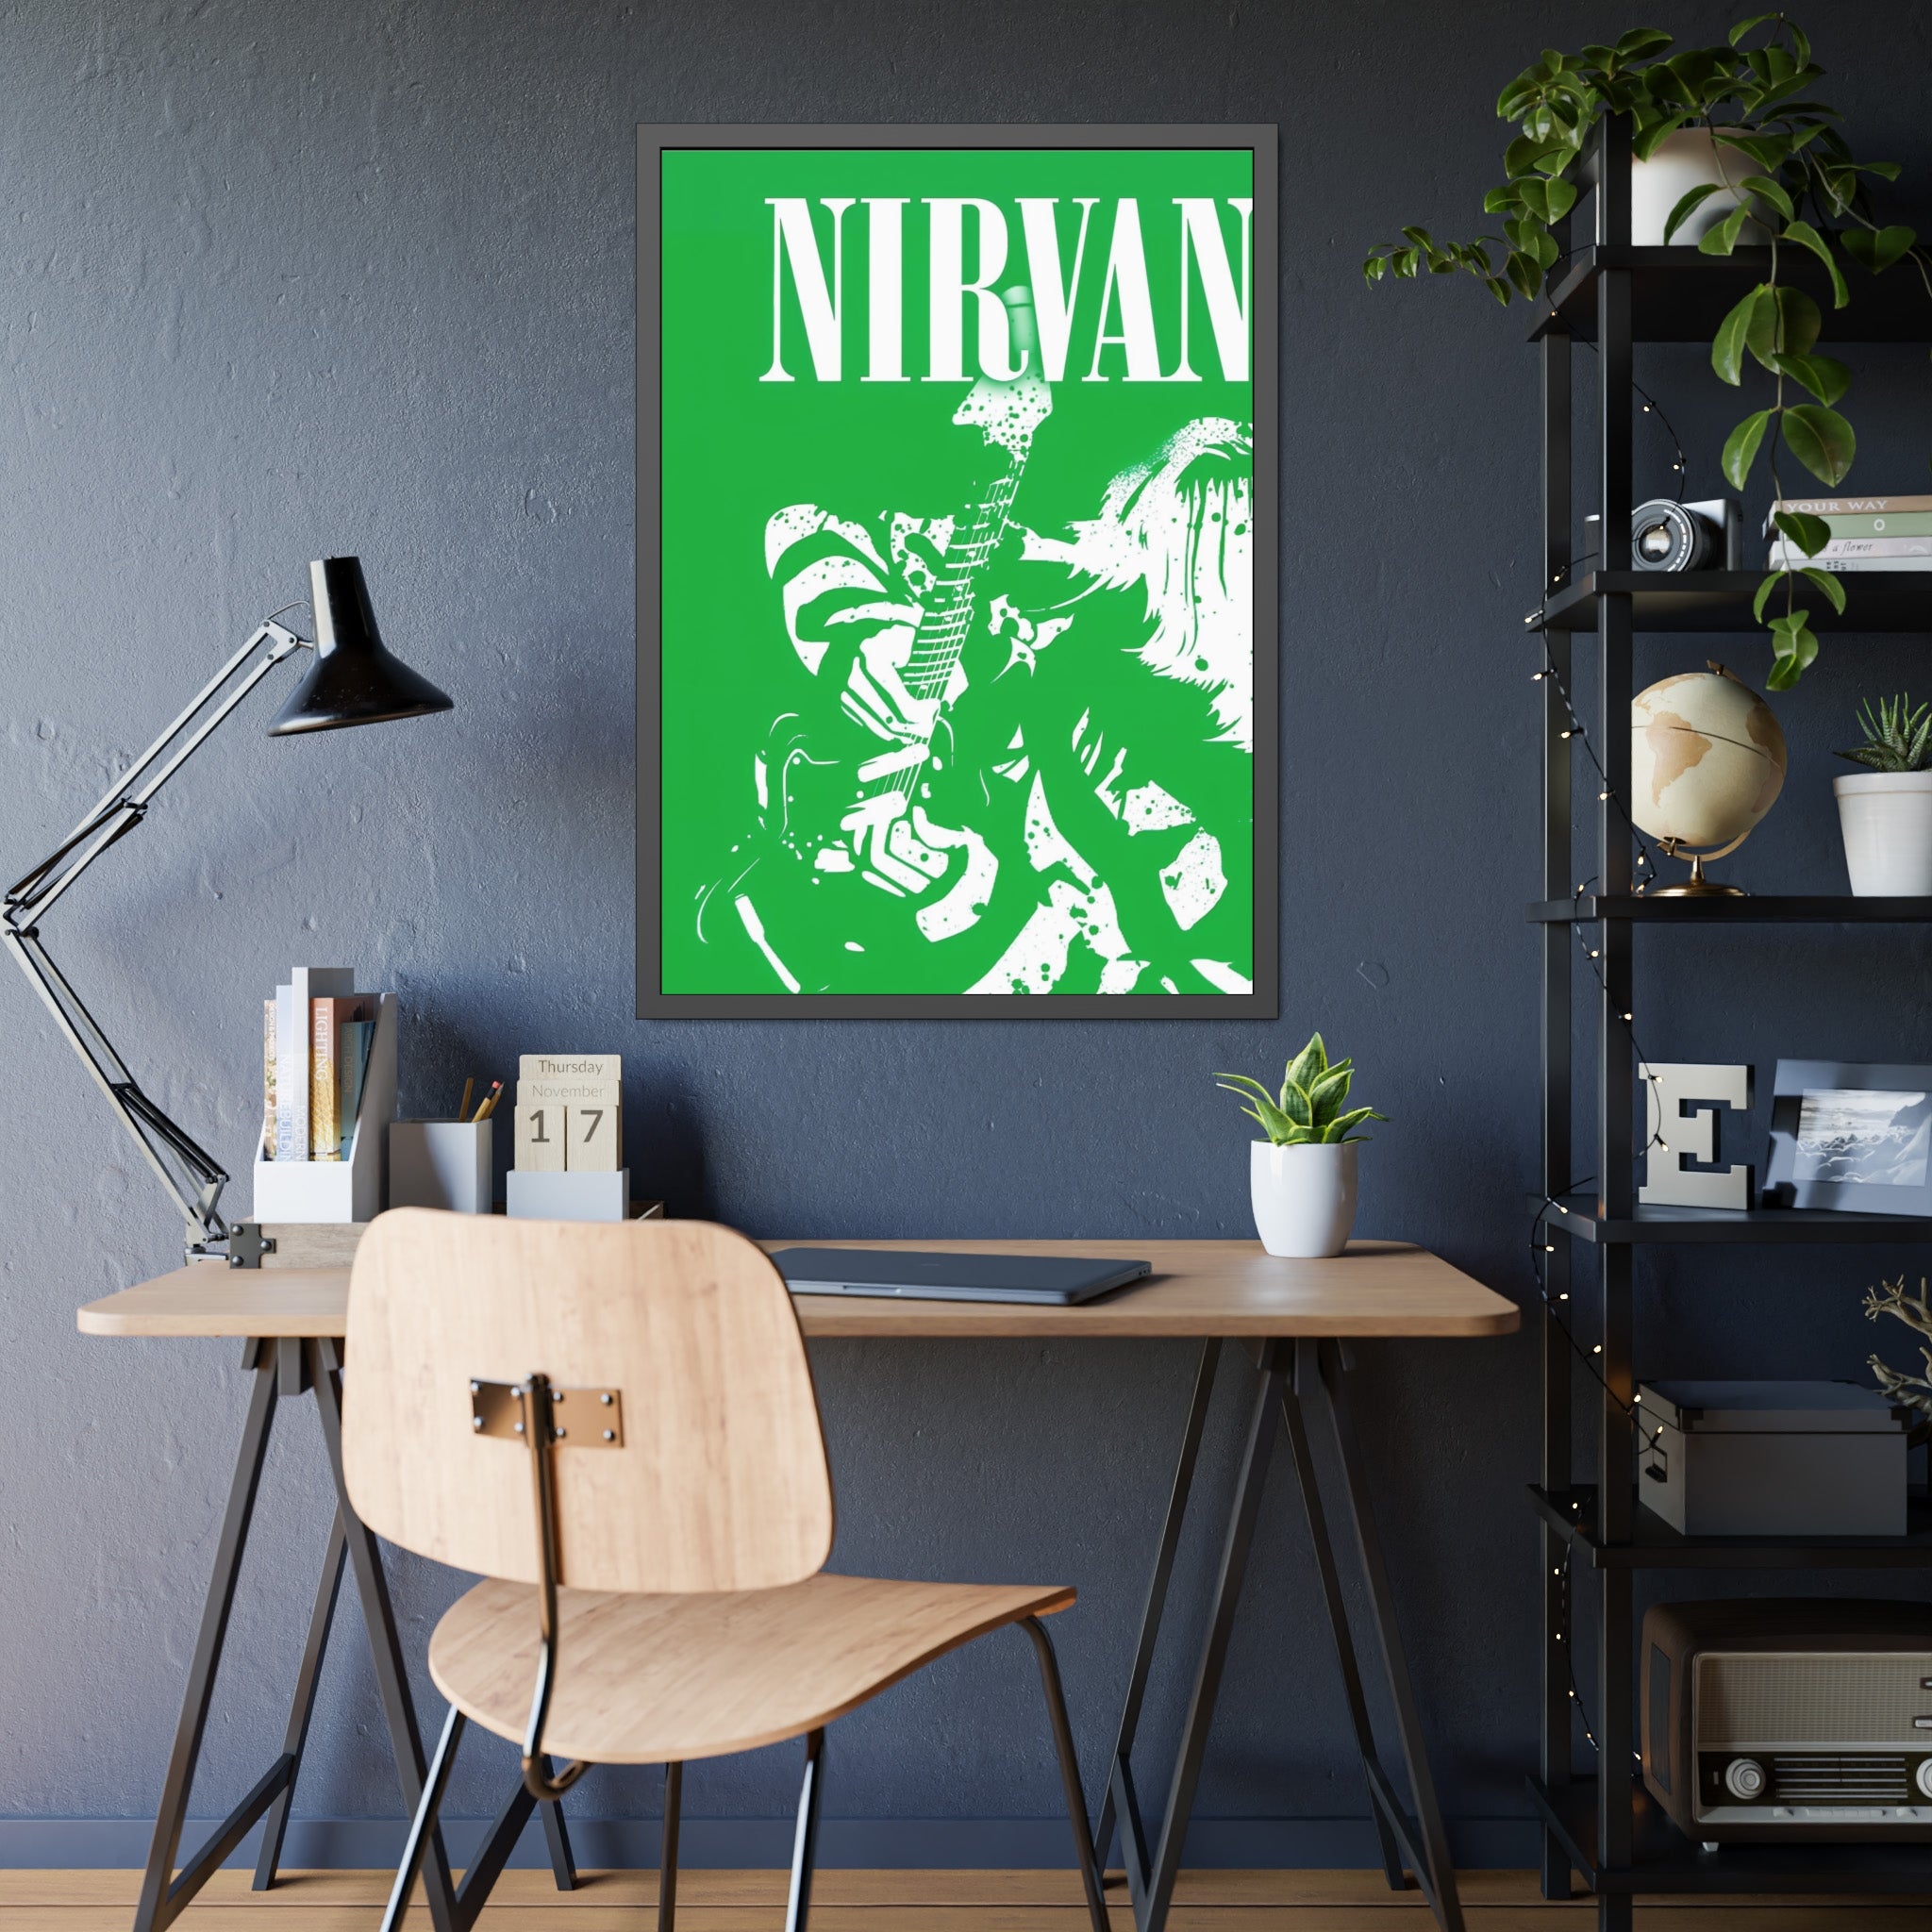 Nirvana Concert Poster 1991